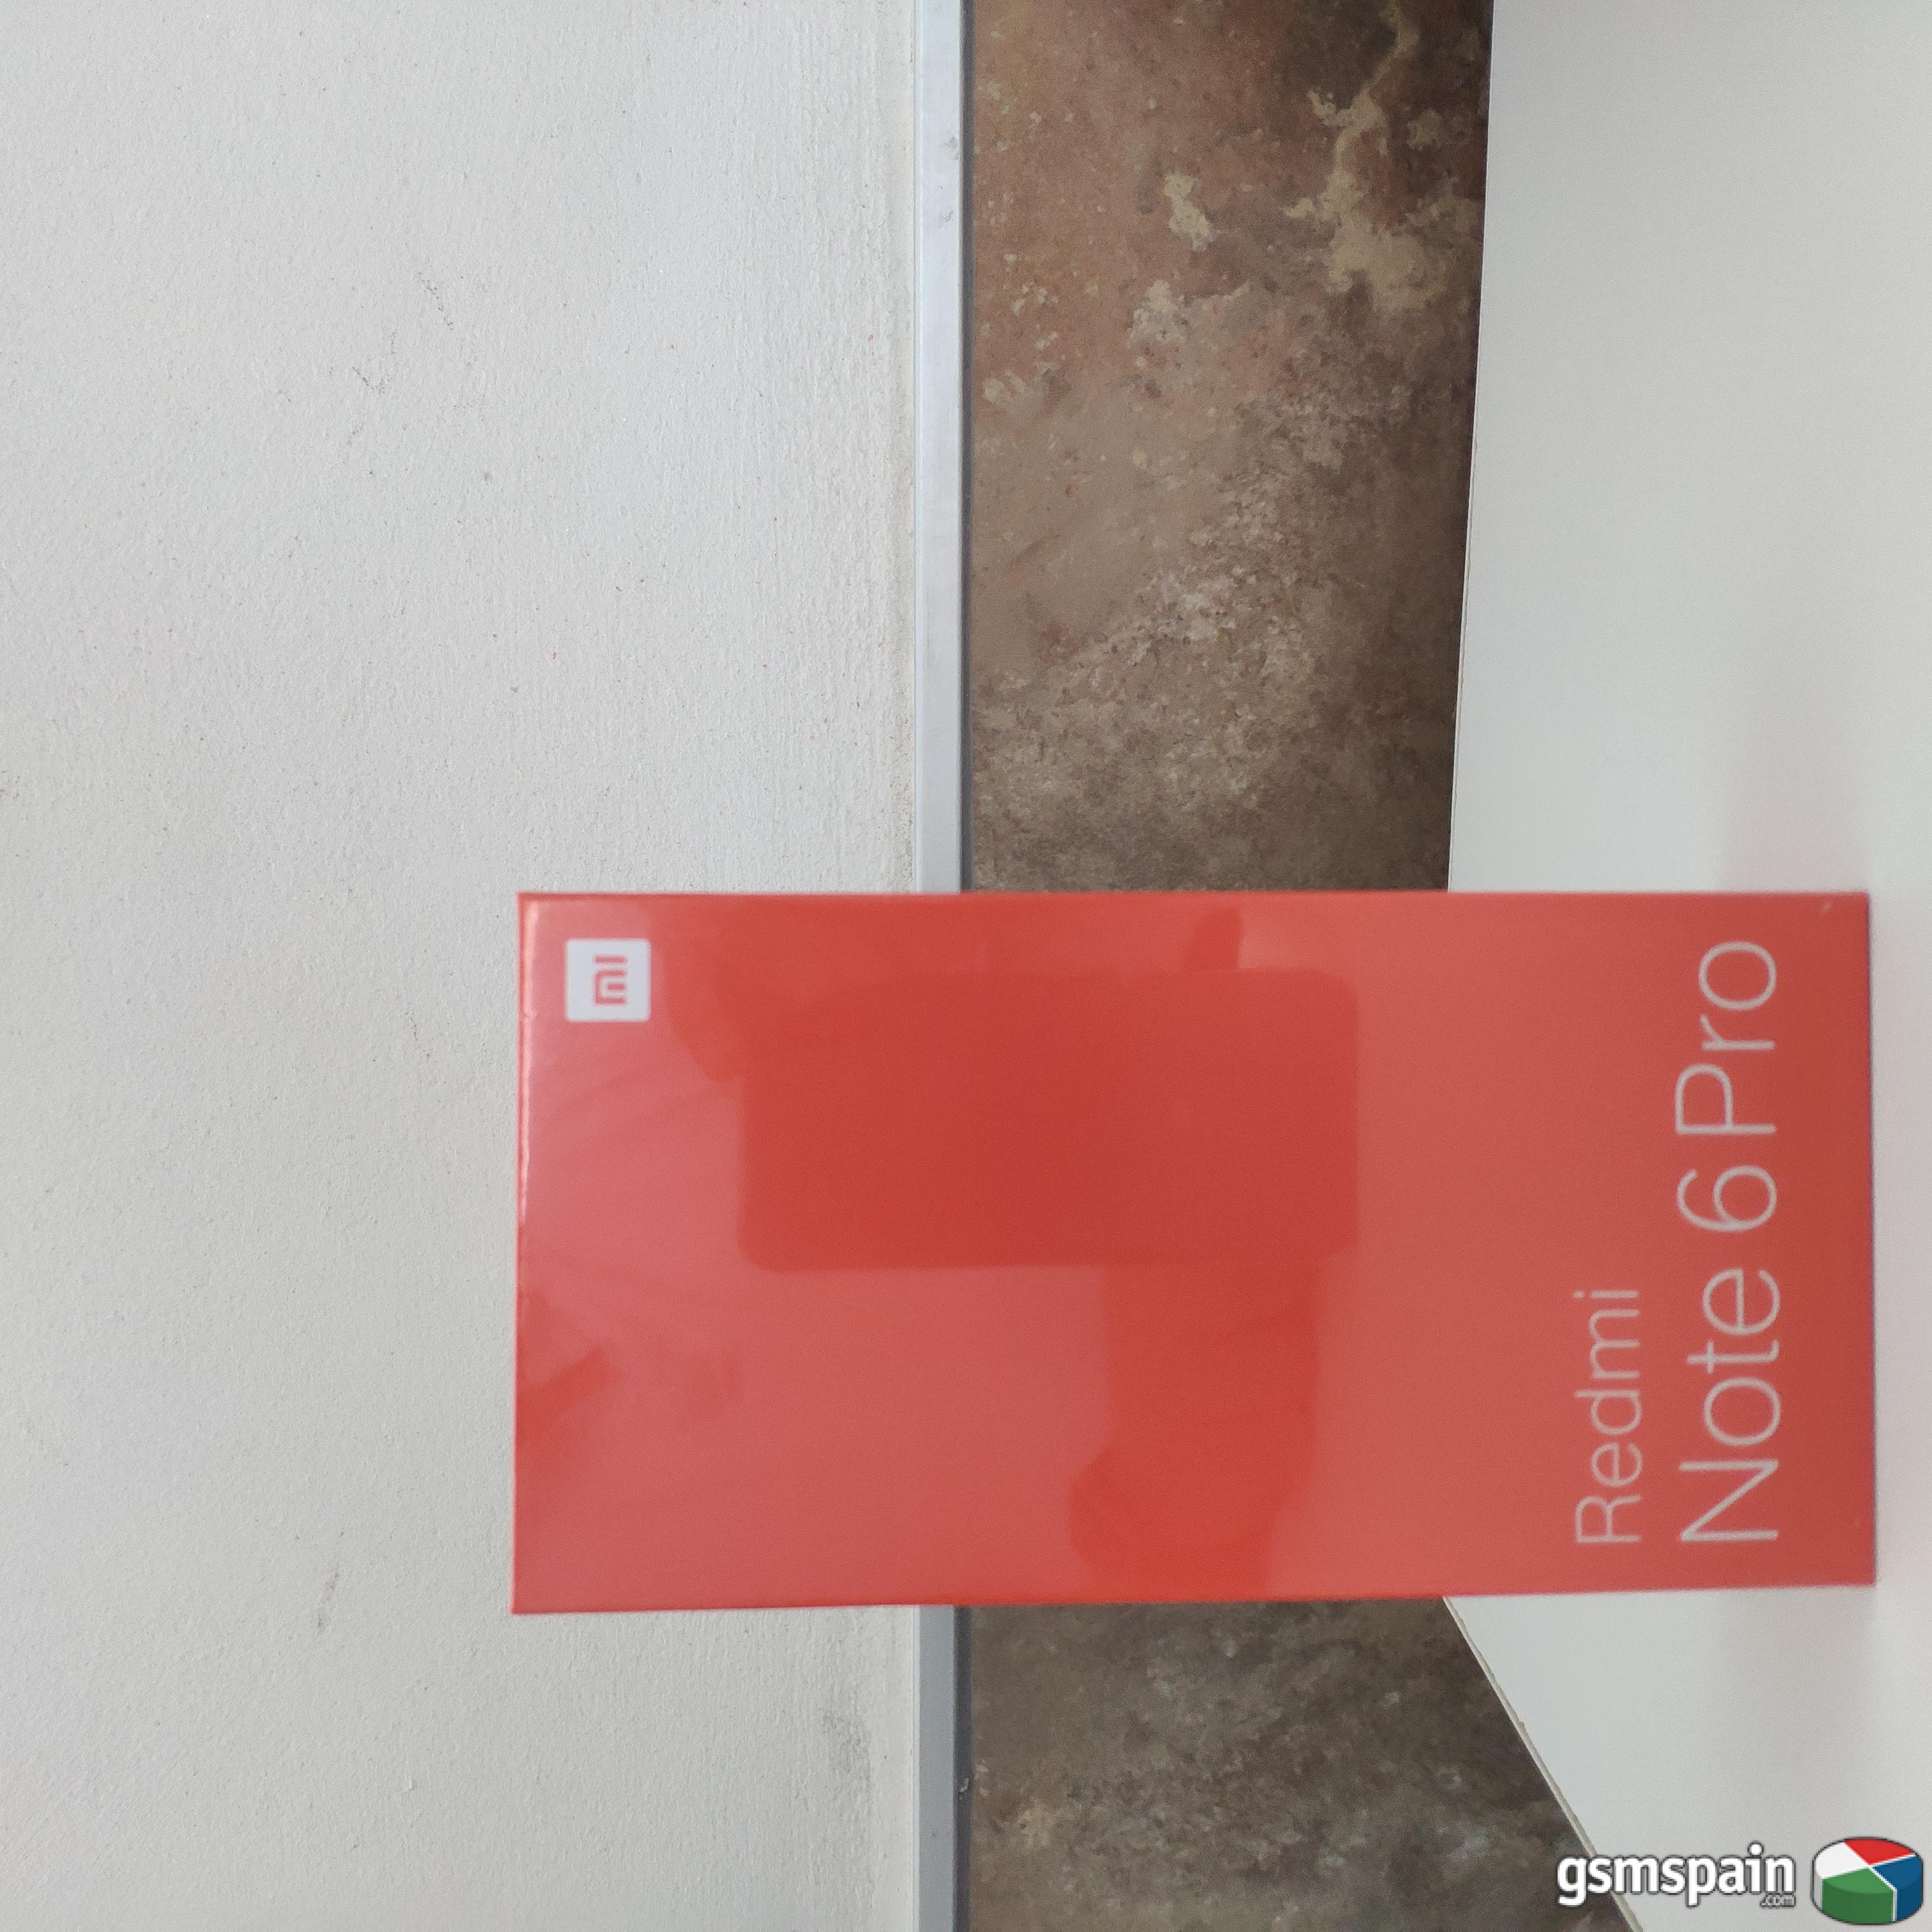 [vendo] Xiaomi Redmi Note 6 Pro 6gb Ram/128gb Memoria/versin Global/precintado/garanta